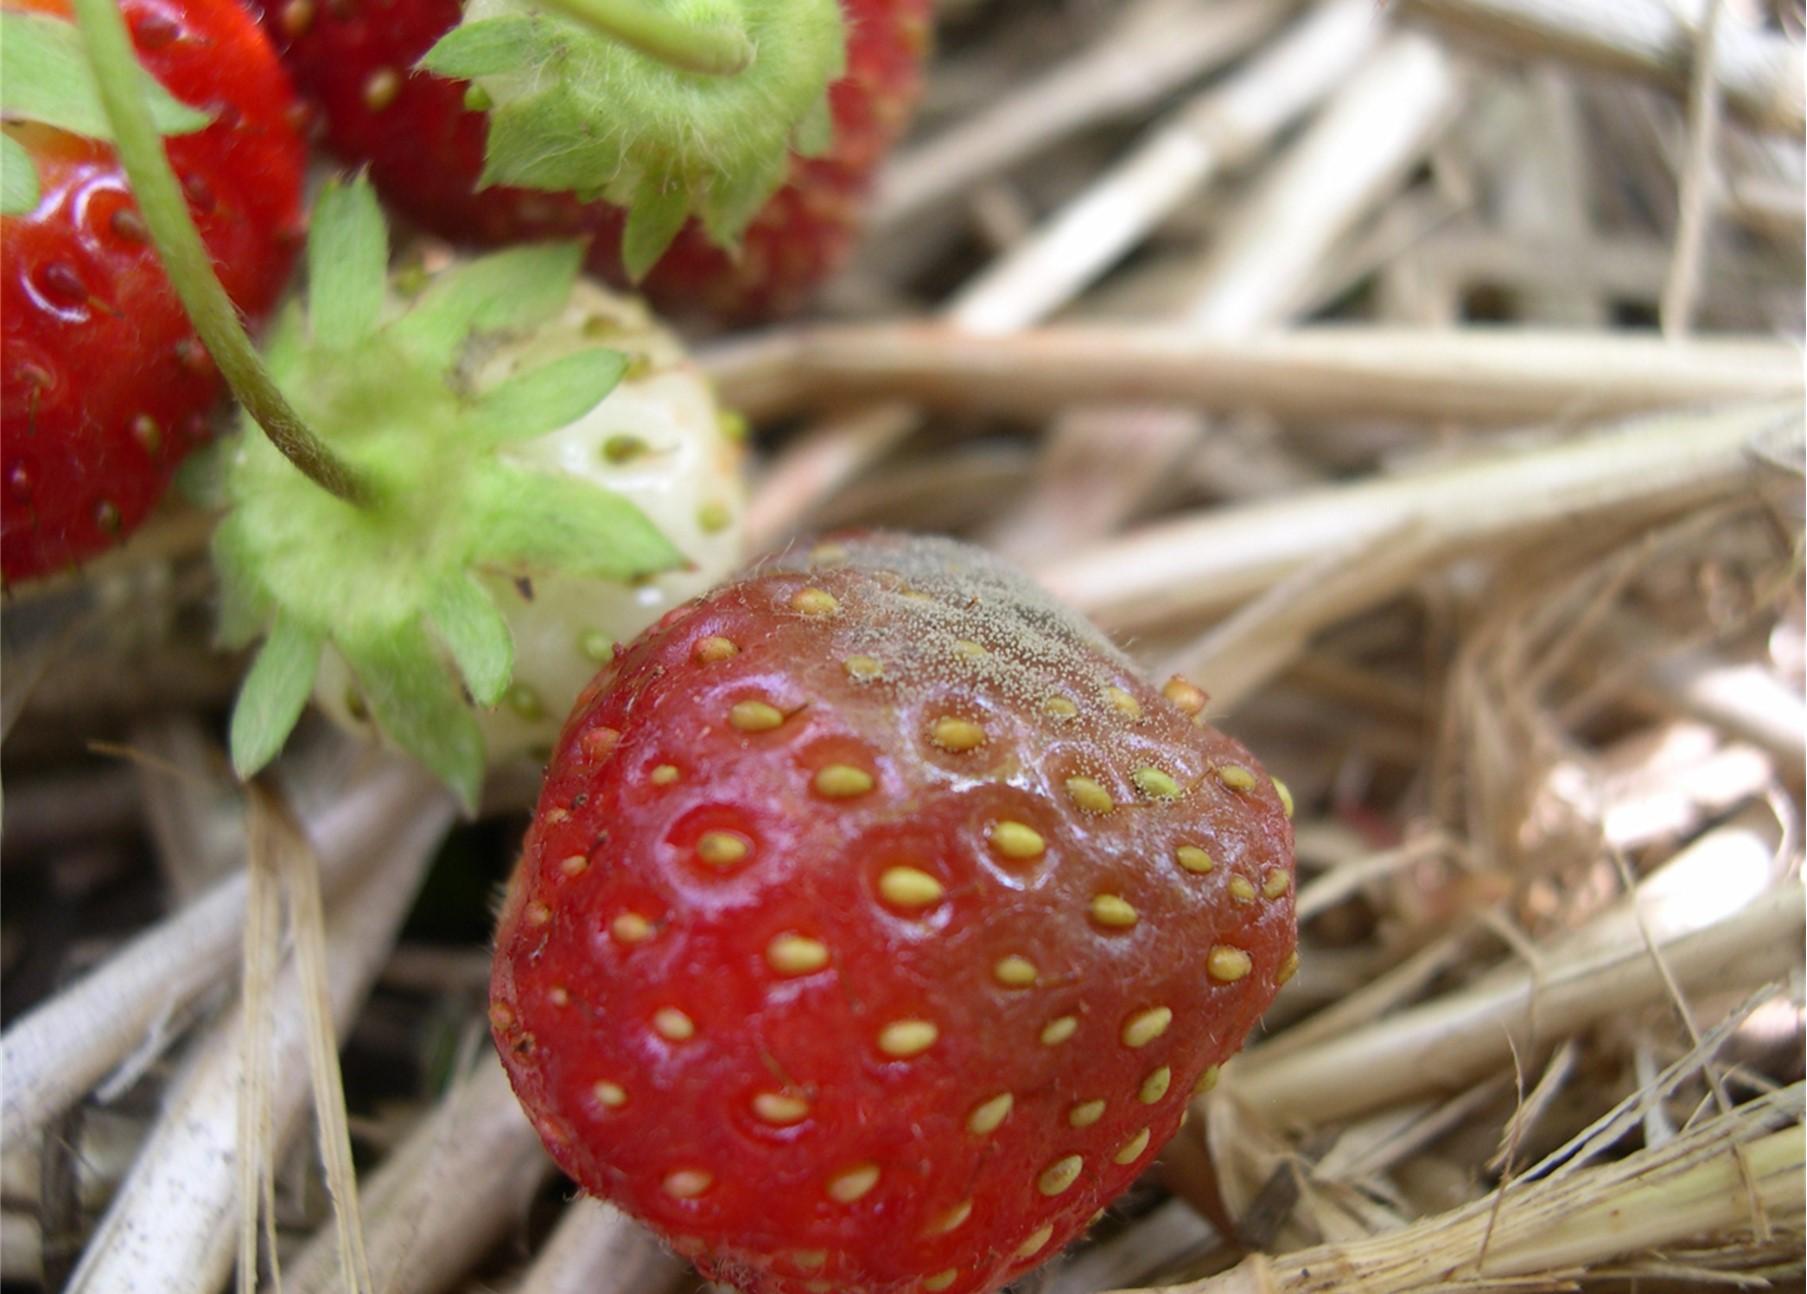 Strawberry with grey mold.  Image: Dr. Mengjun Hu